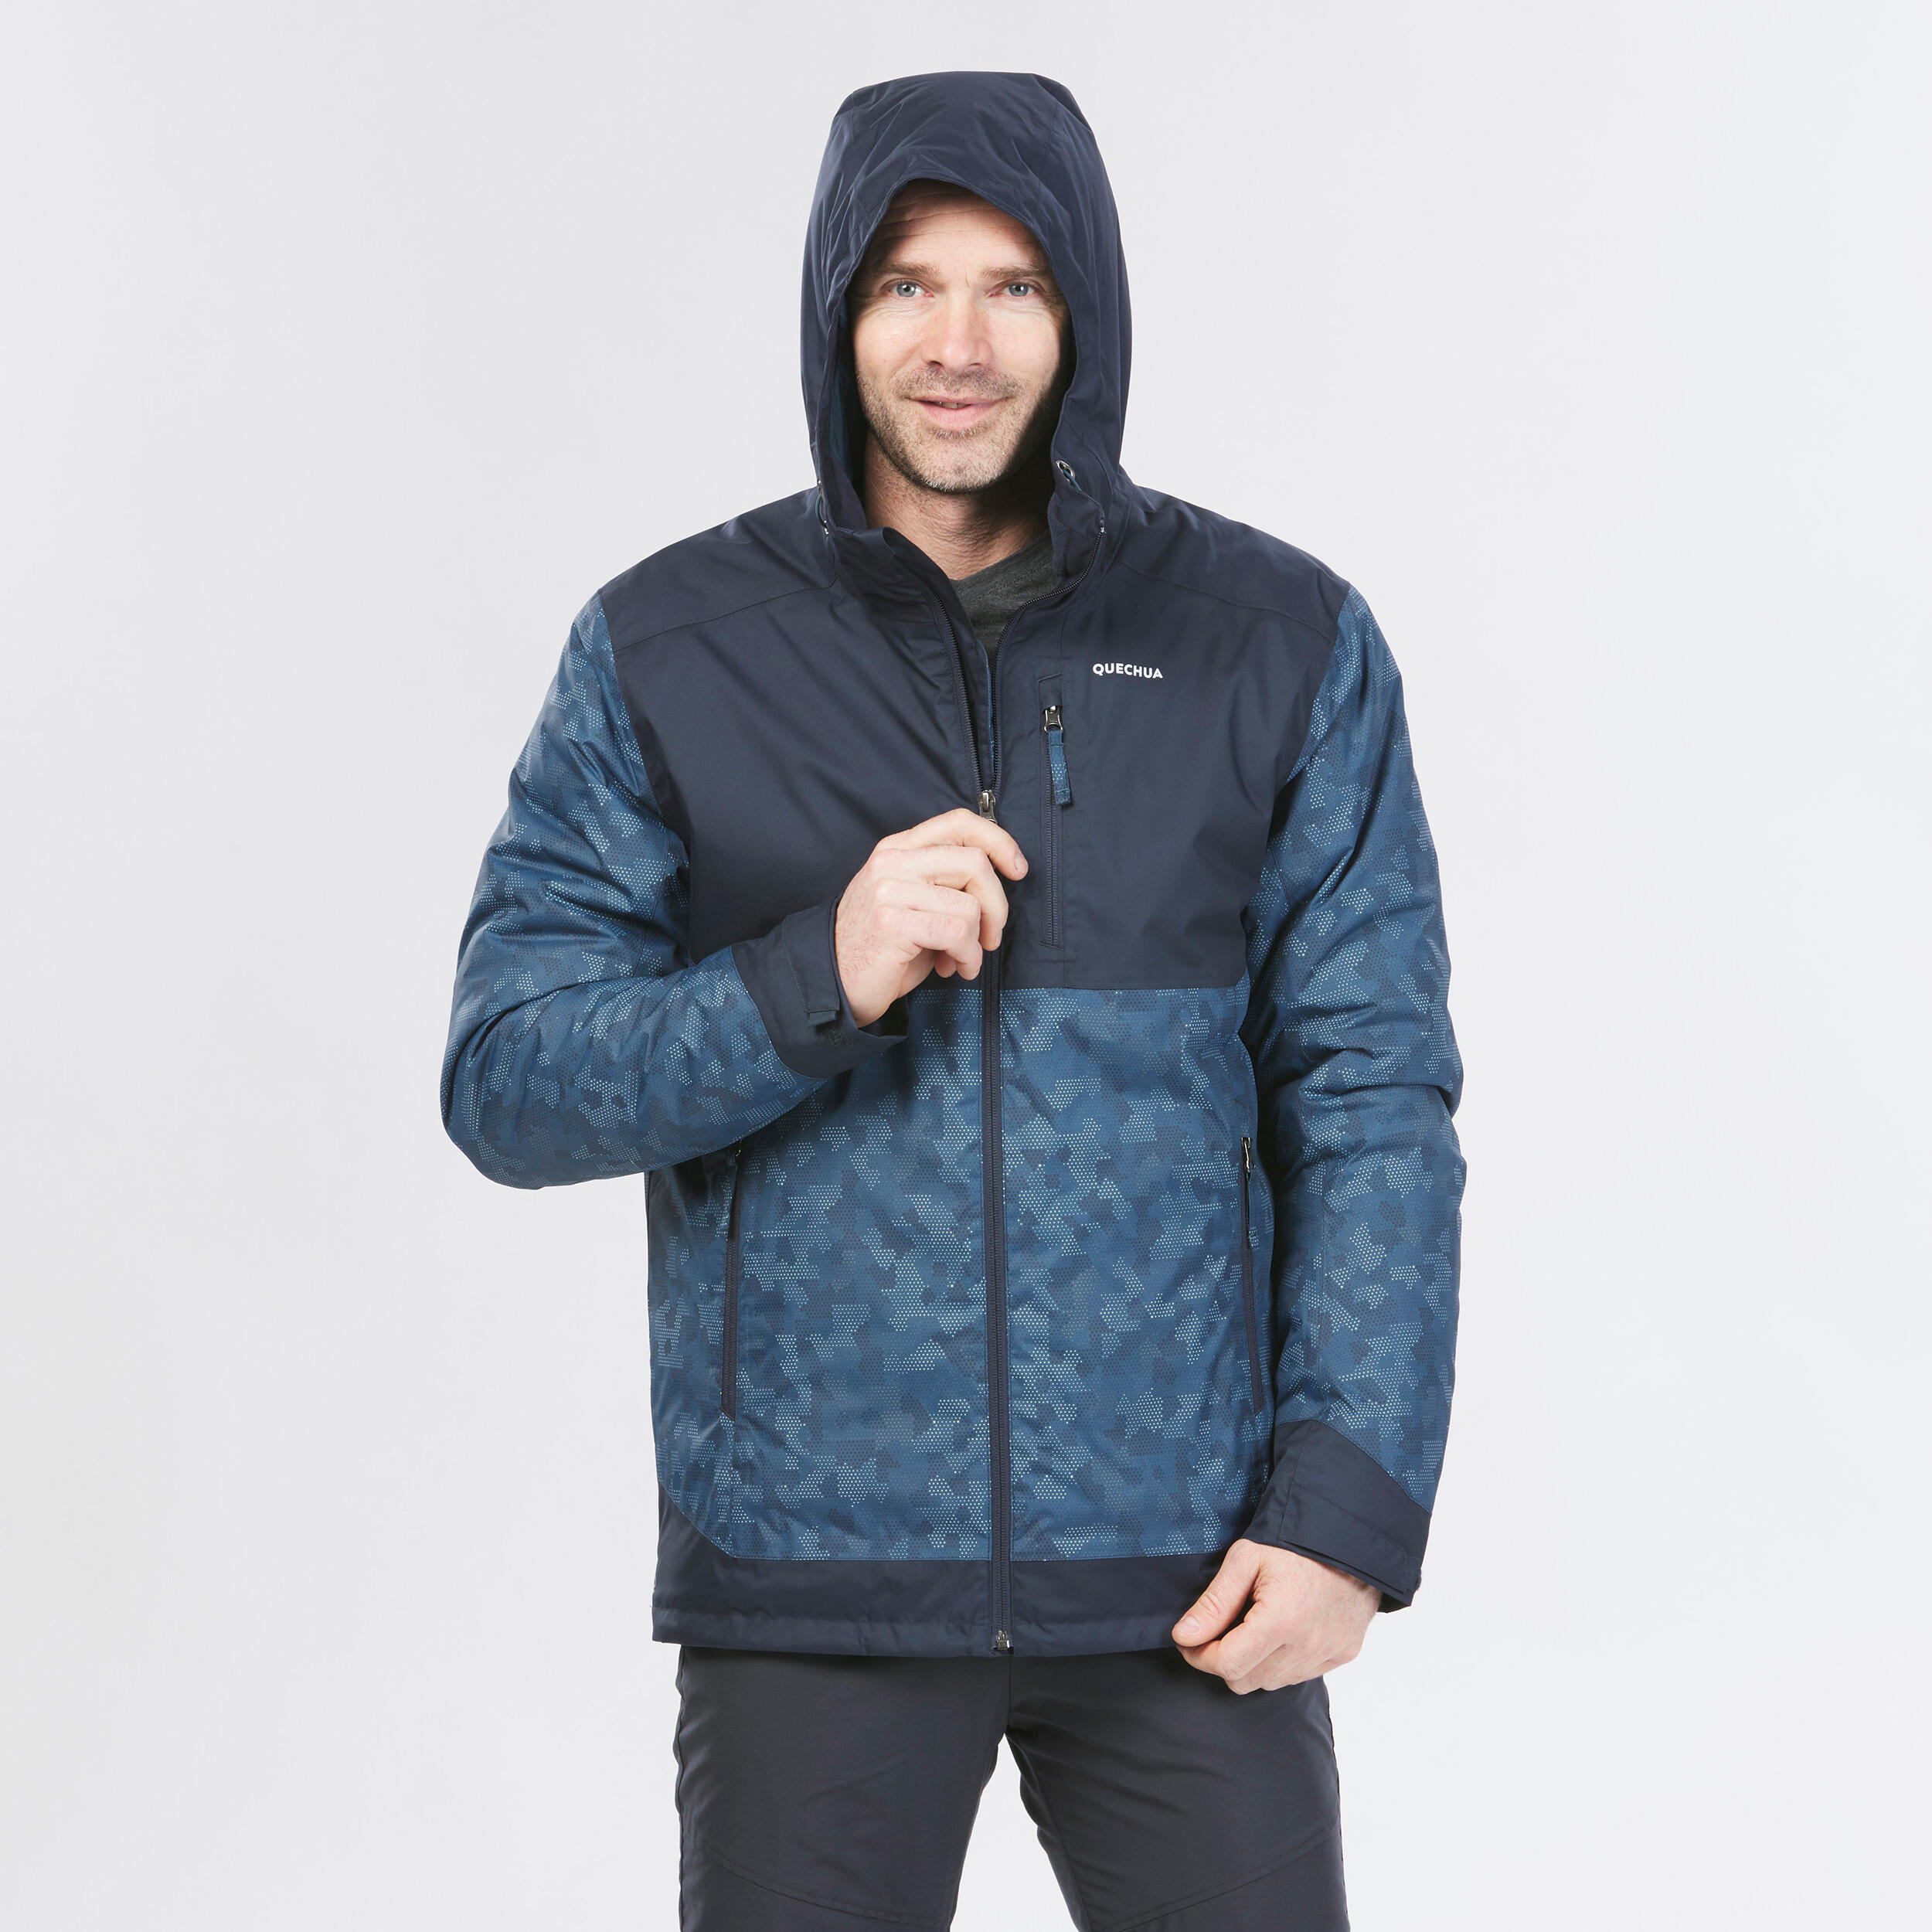 Decathlon Coats & Jackets Styles, Prices - Trendyol